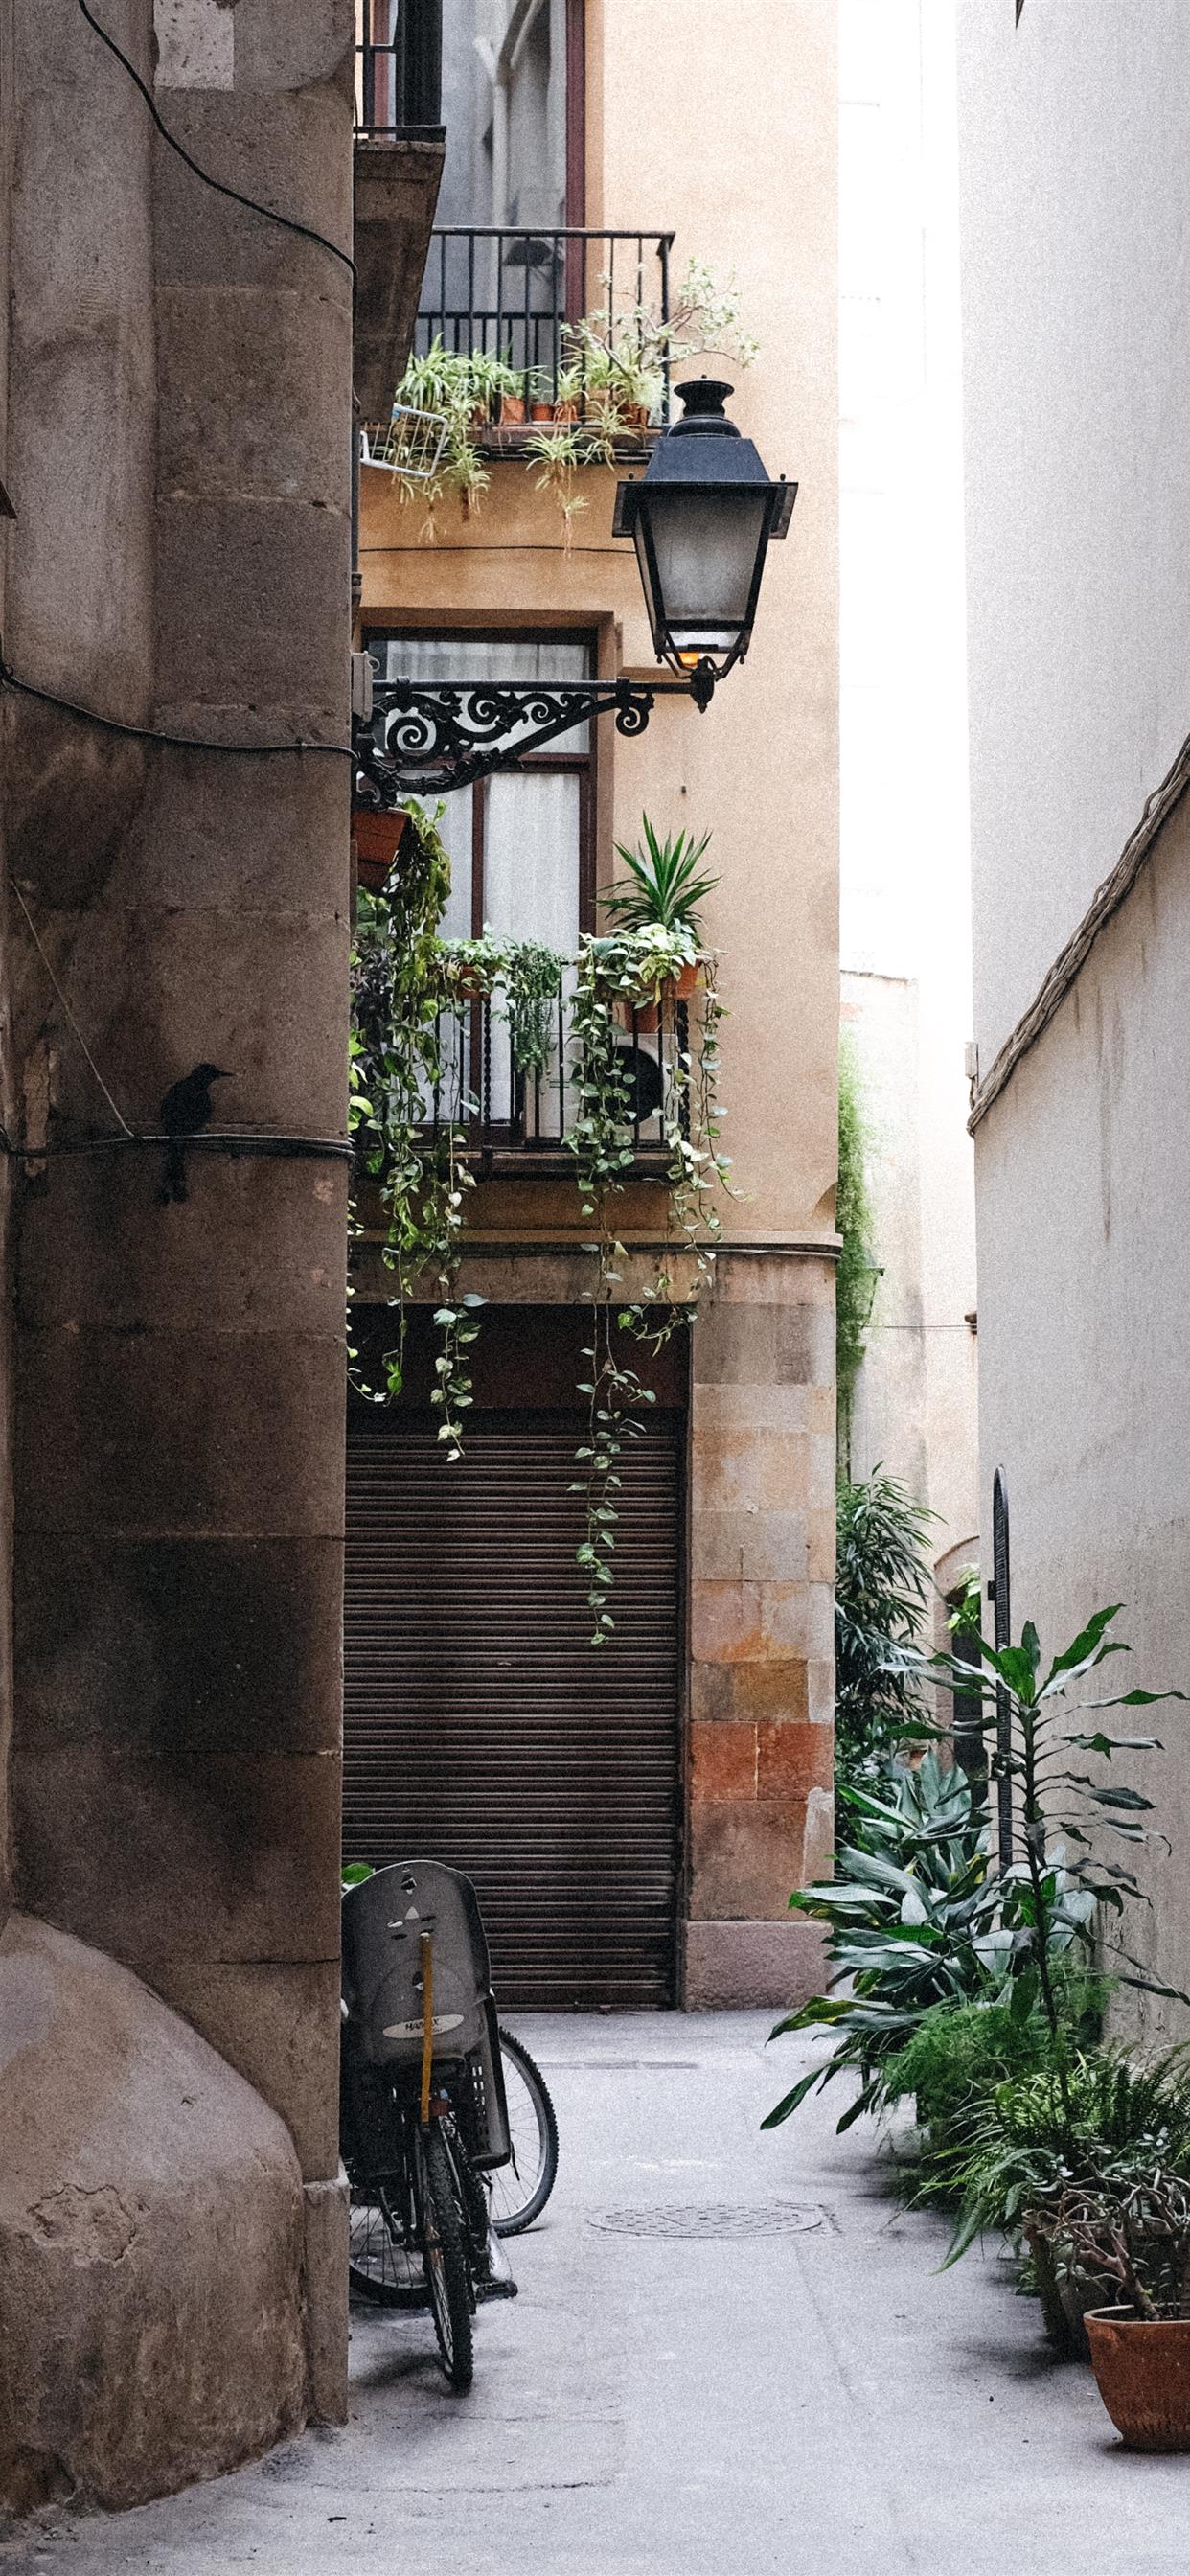 Barcelona Spain iPhone X Wallpaper Free Download